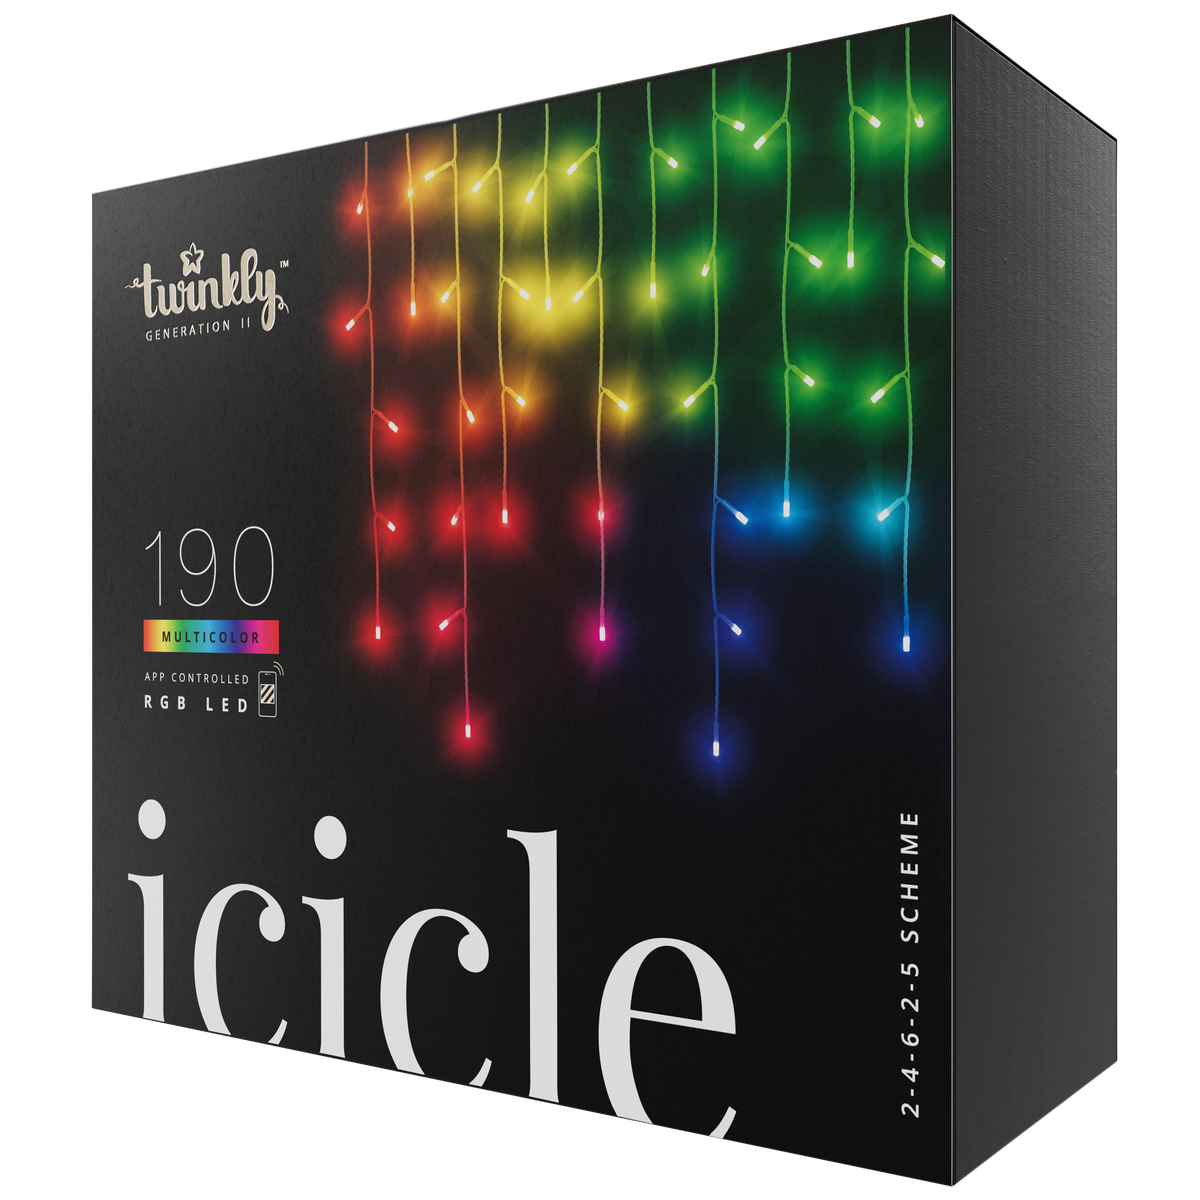 Icicle (édition multicolore)